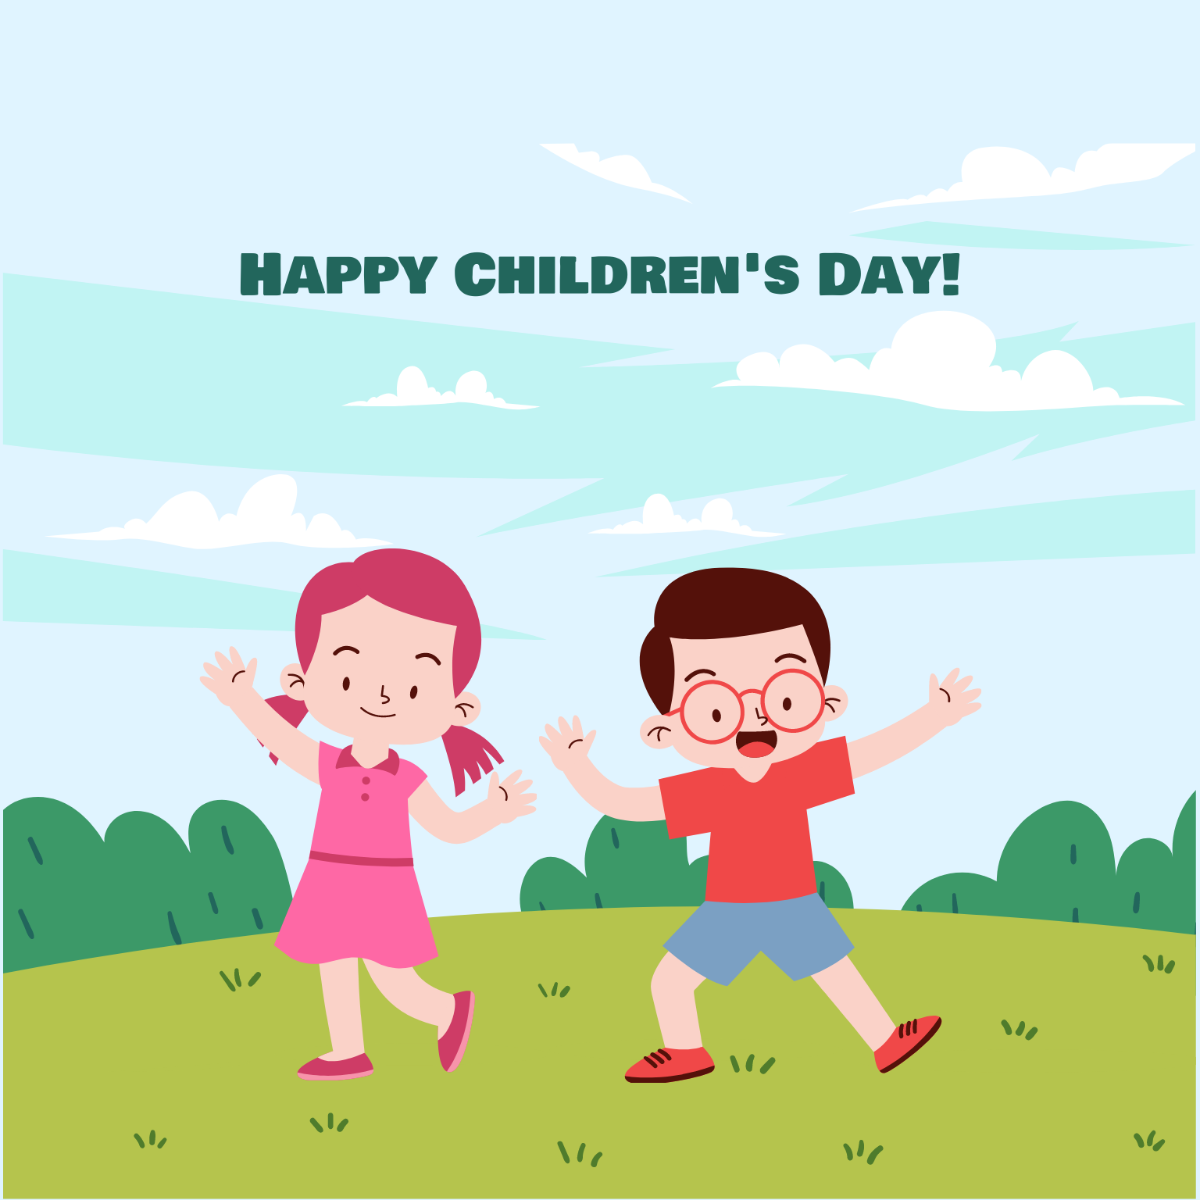 Free Happy Children's Day Illustration Template